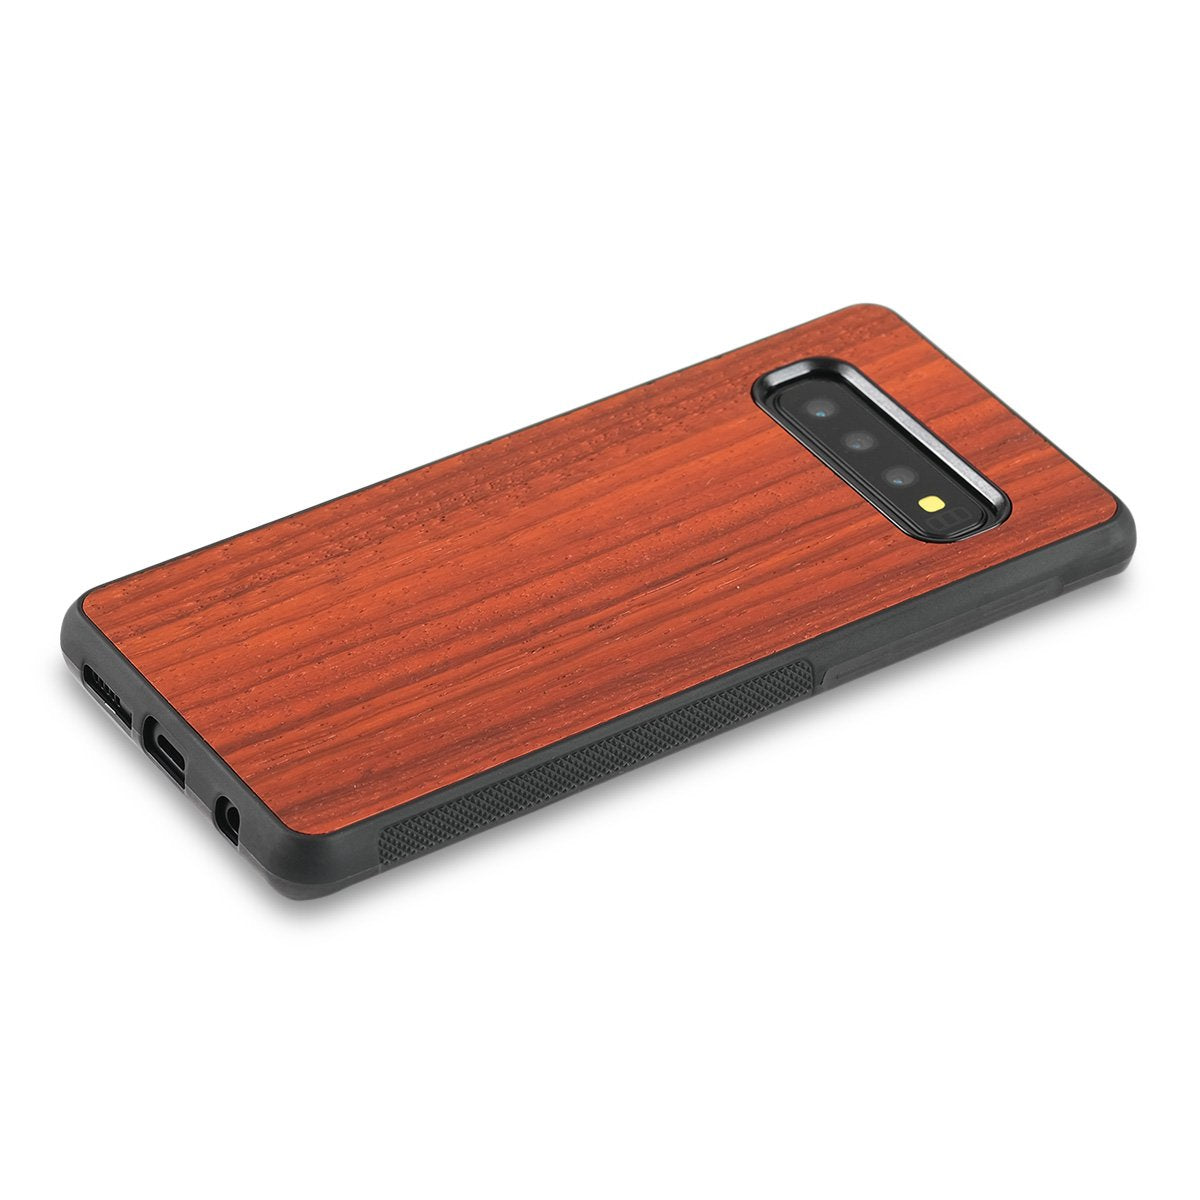 Samsung Galaxy S10 Plus —  #WoodBack Explorer Case